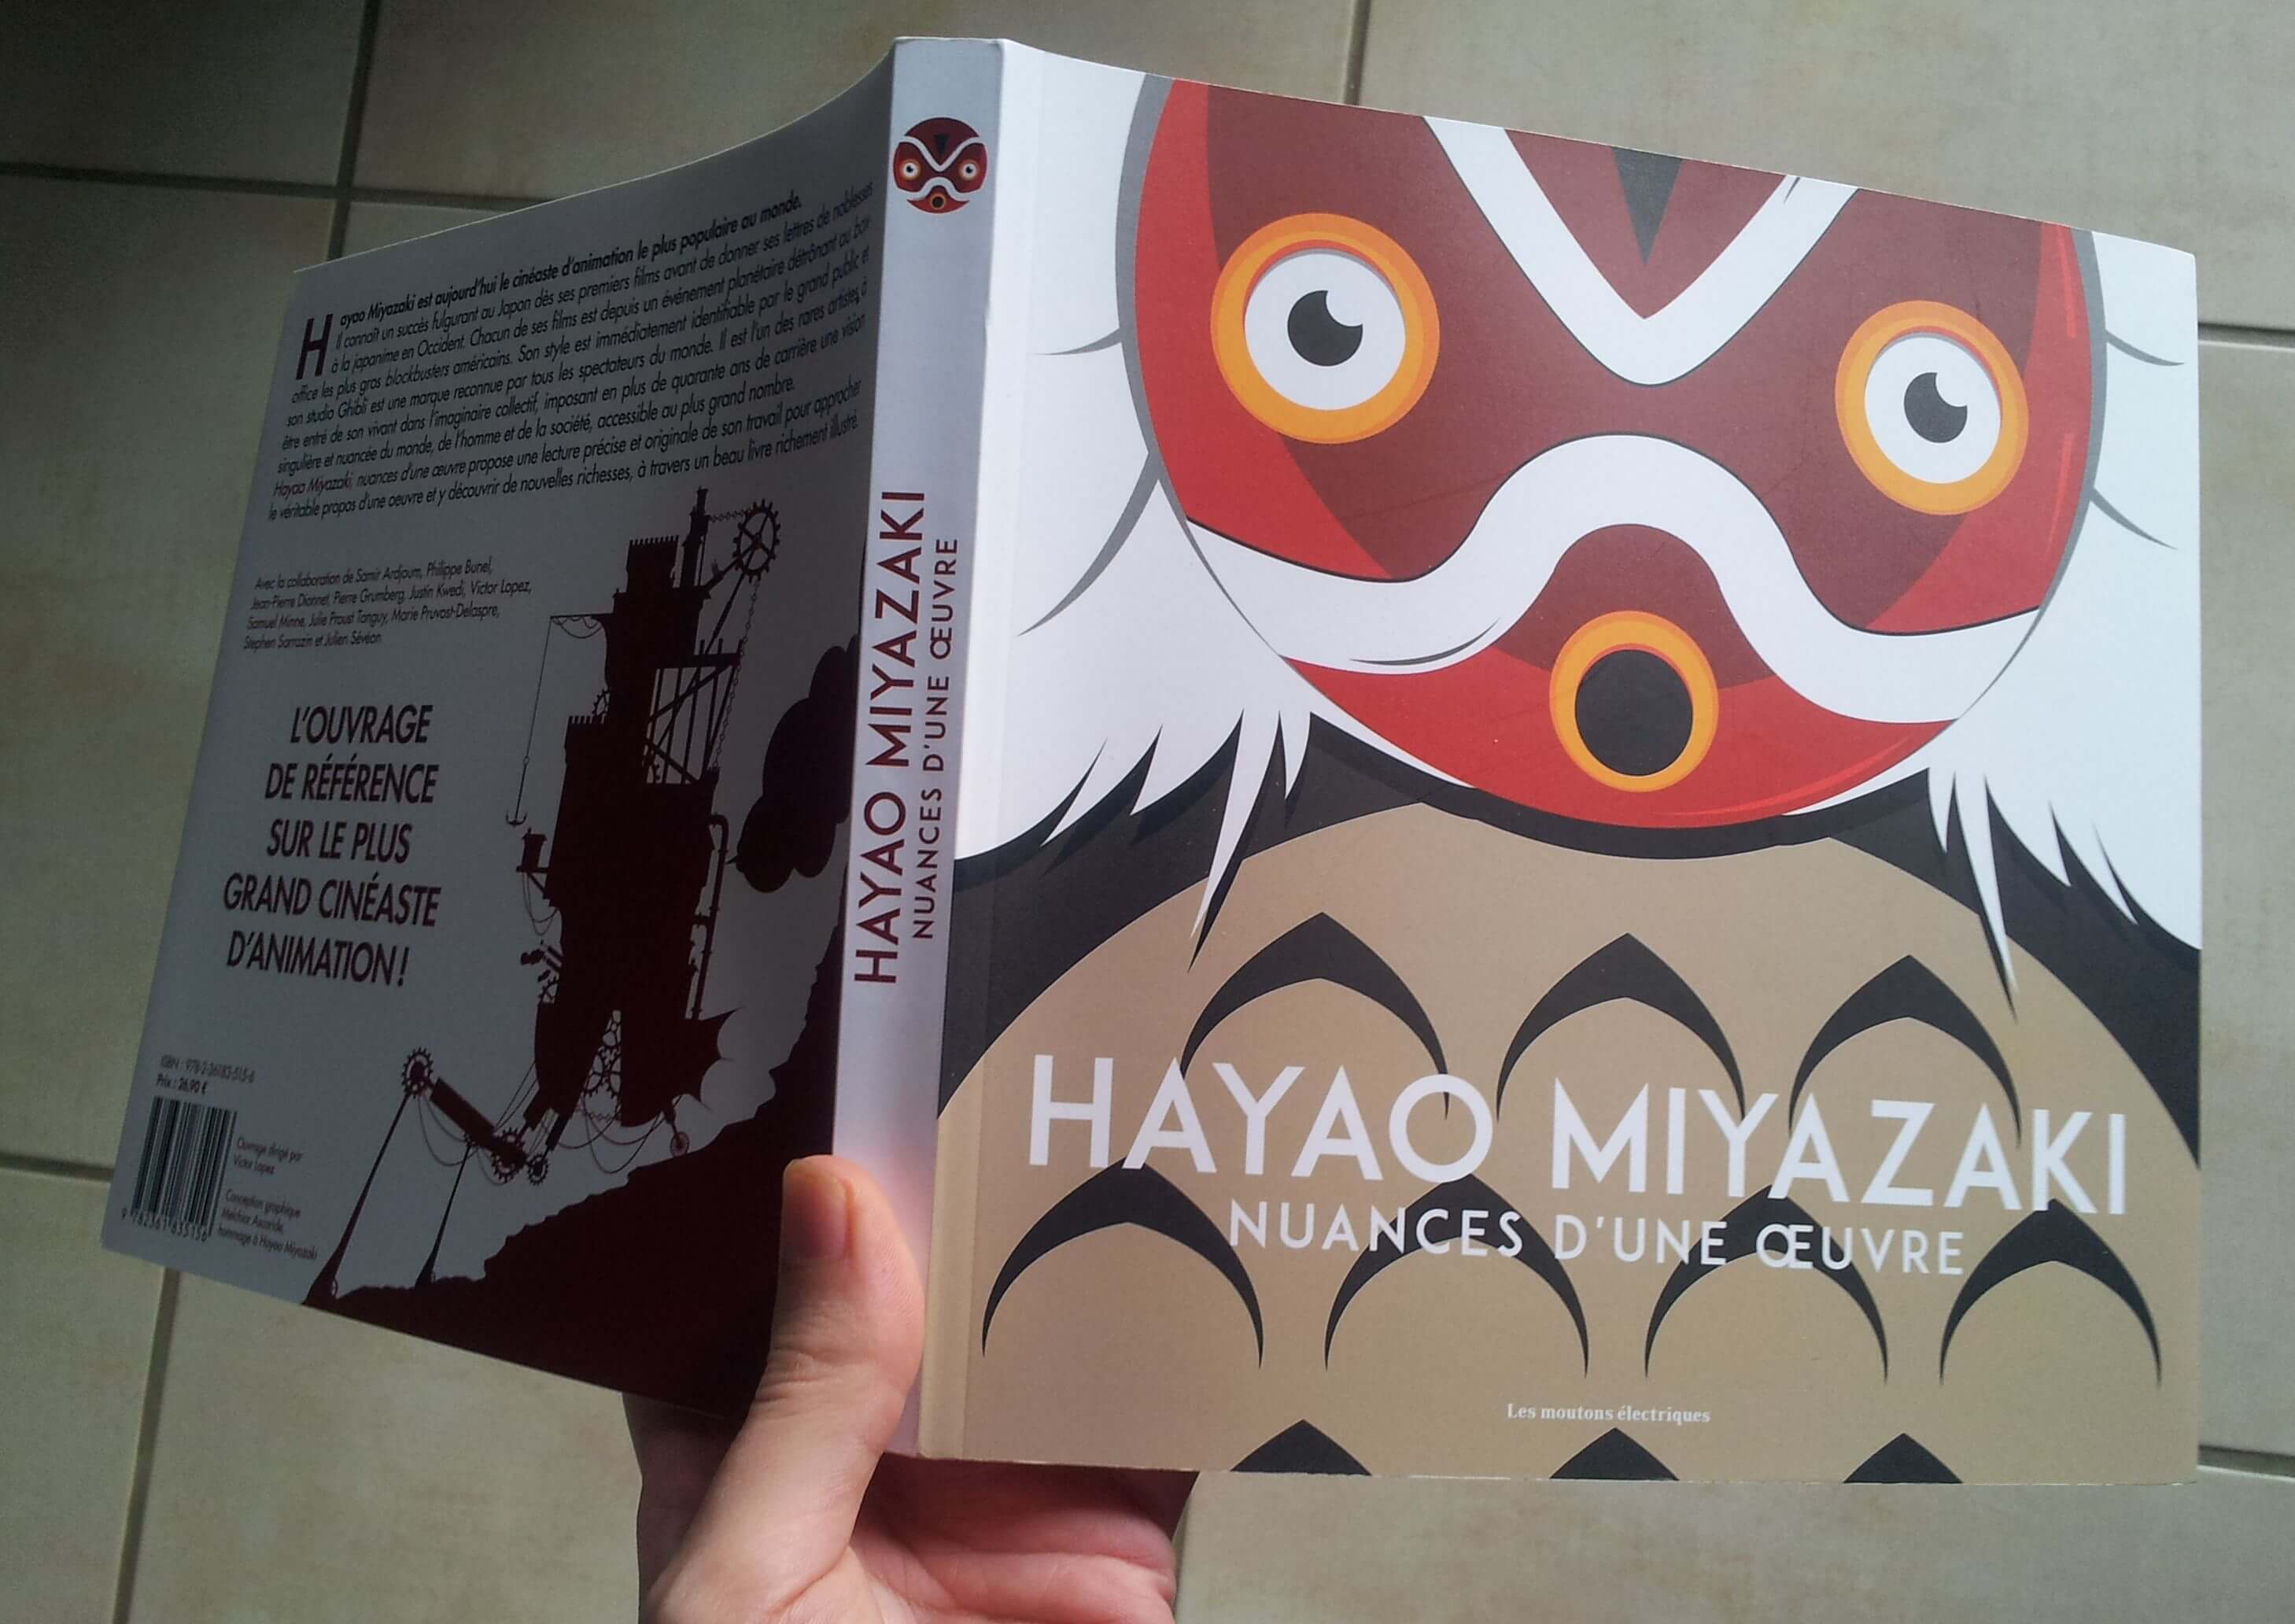 https://www.studioghibli.fr/wp-content/uploads/2018/12/nuances-d-une-oeuvre-Hayao-miyazaki-photo-couverture.jpg